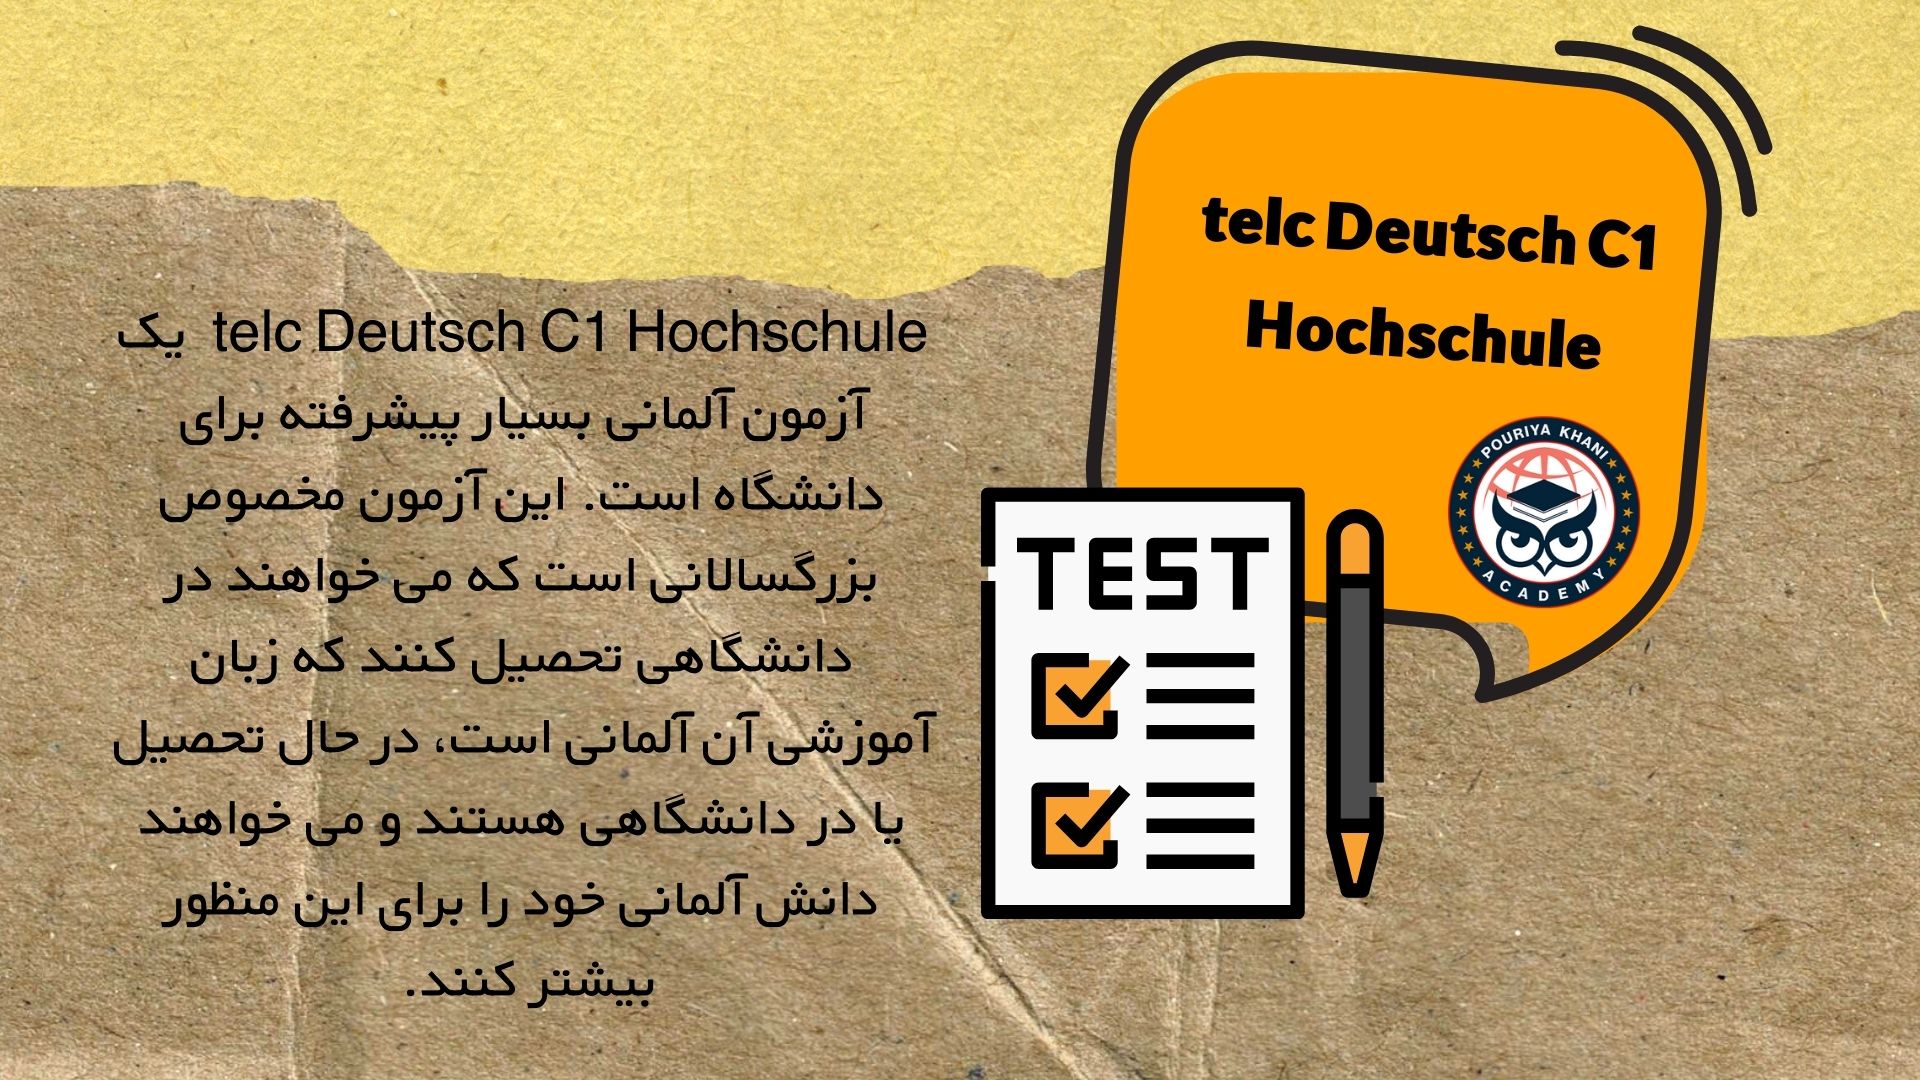 telc Deutsch C1 Hochschule: